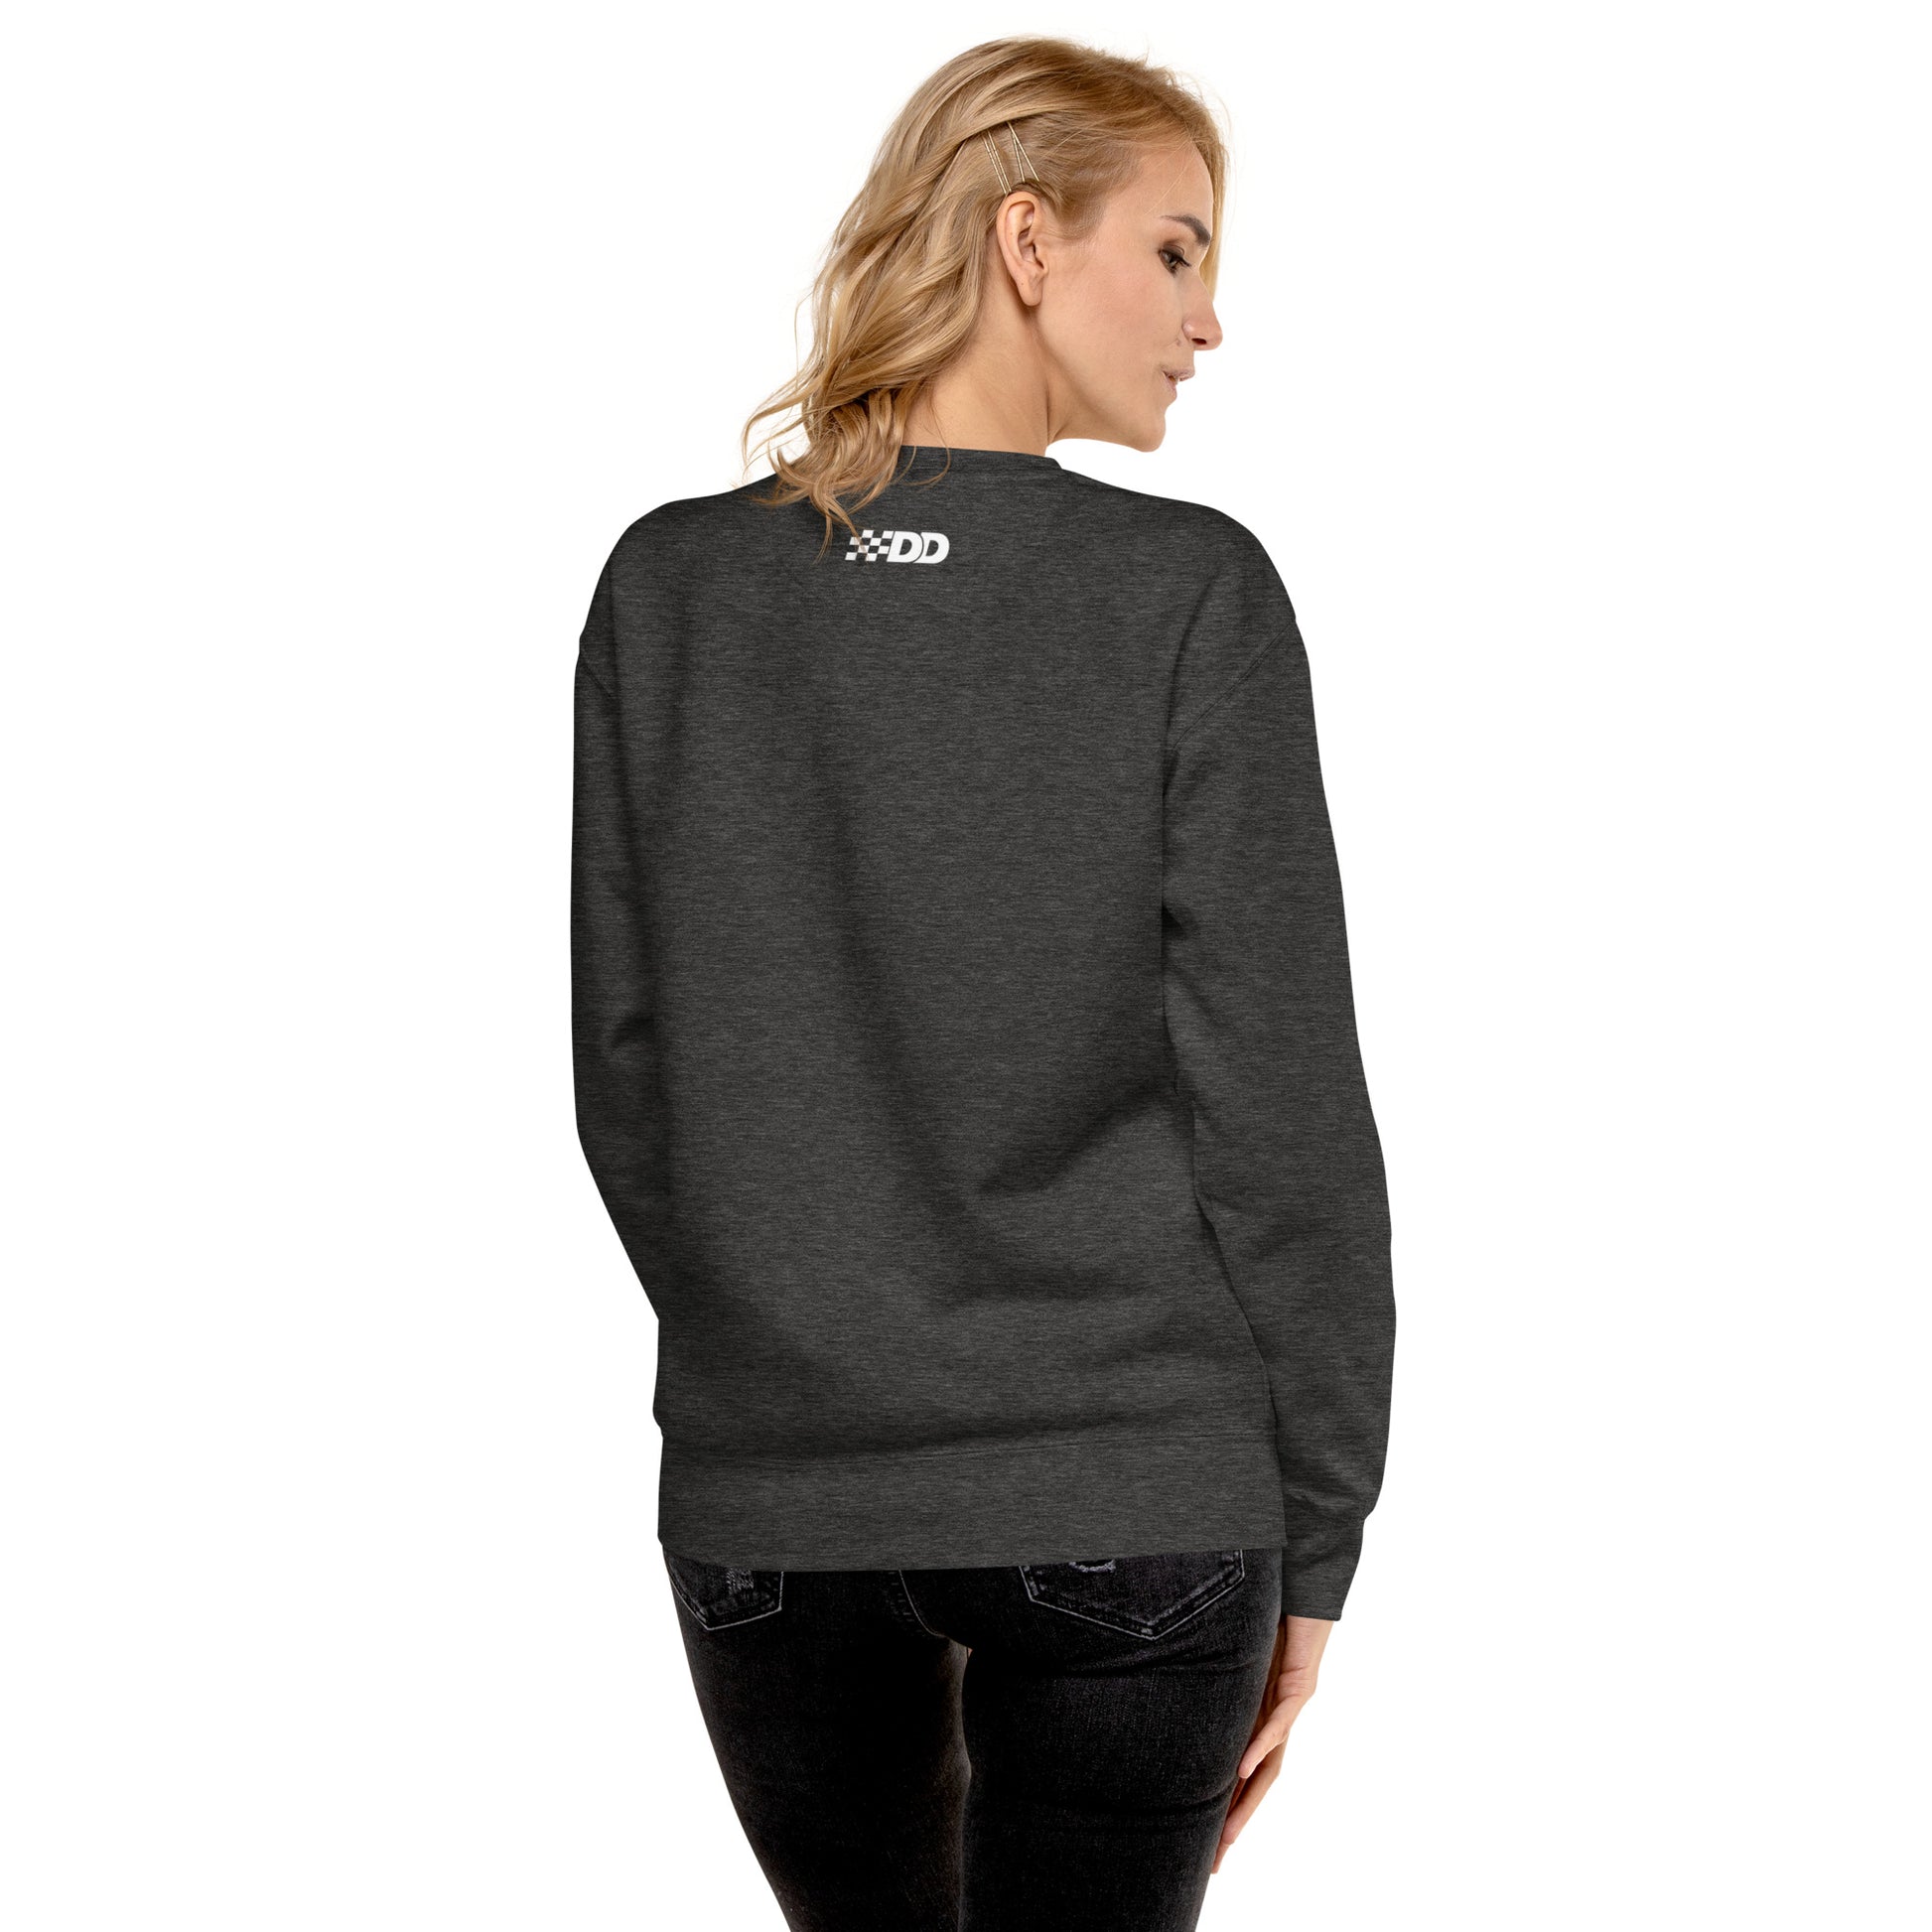 Unisex Premium Sweatshirt - [Daniel Dye Racing Shop]